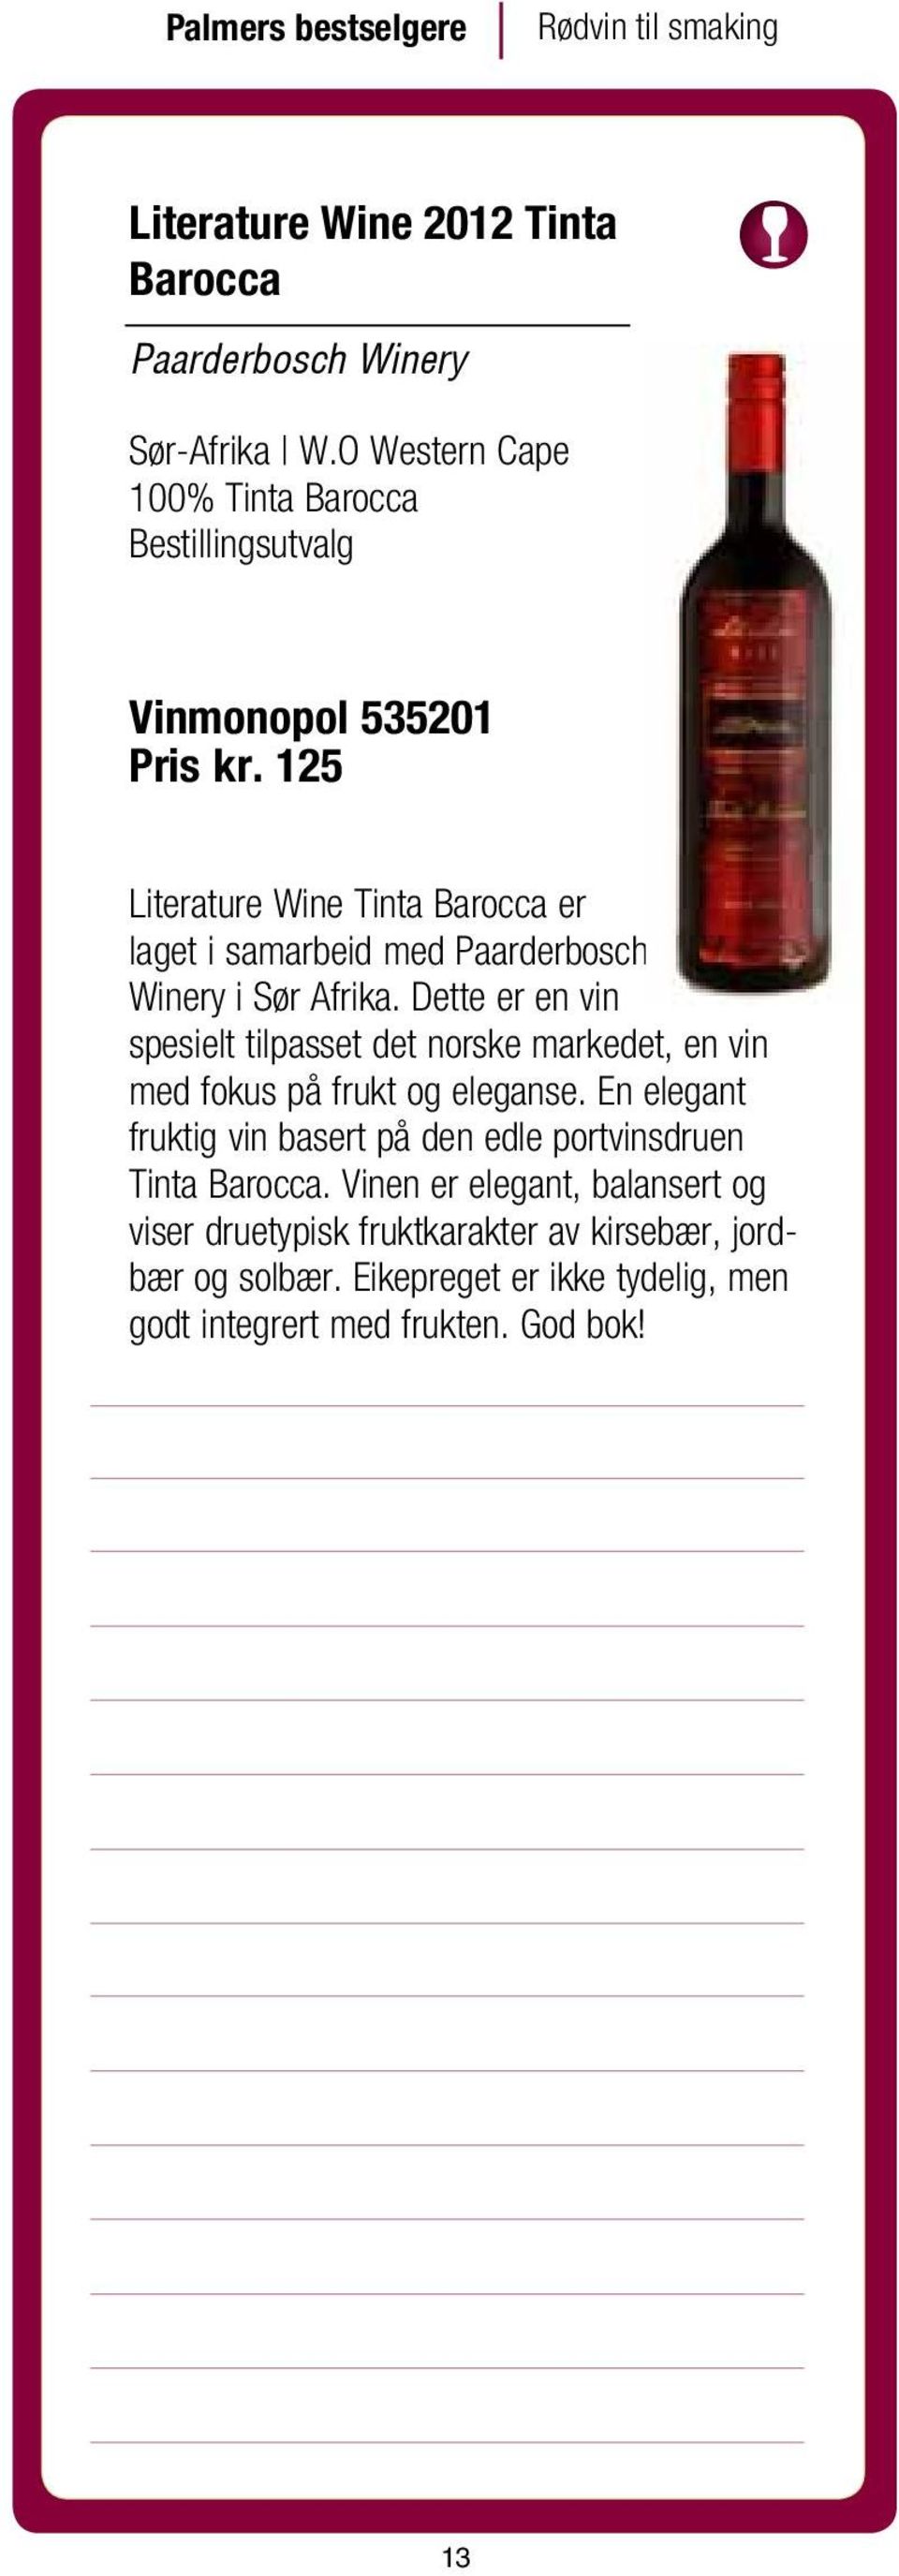 125 Literature Wine Tinta Barocca er laget i samarbeid med Paarderbosch Winery i Sør Afrika.